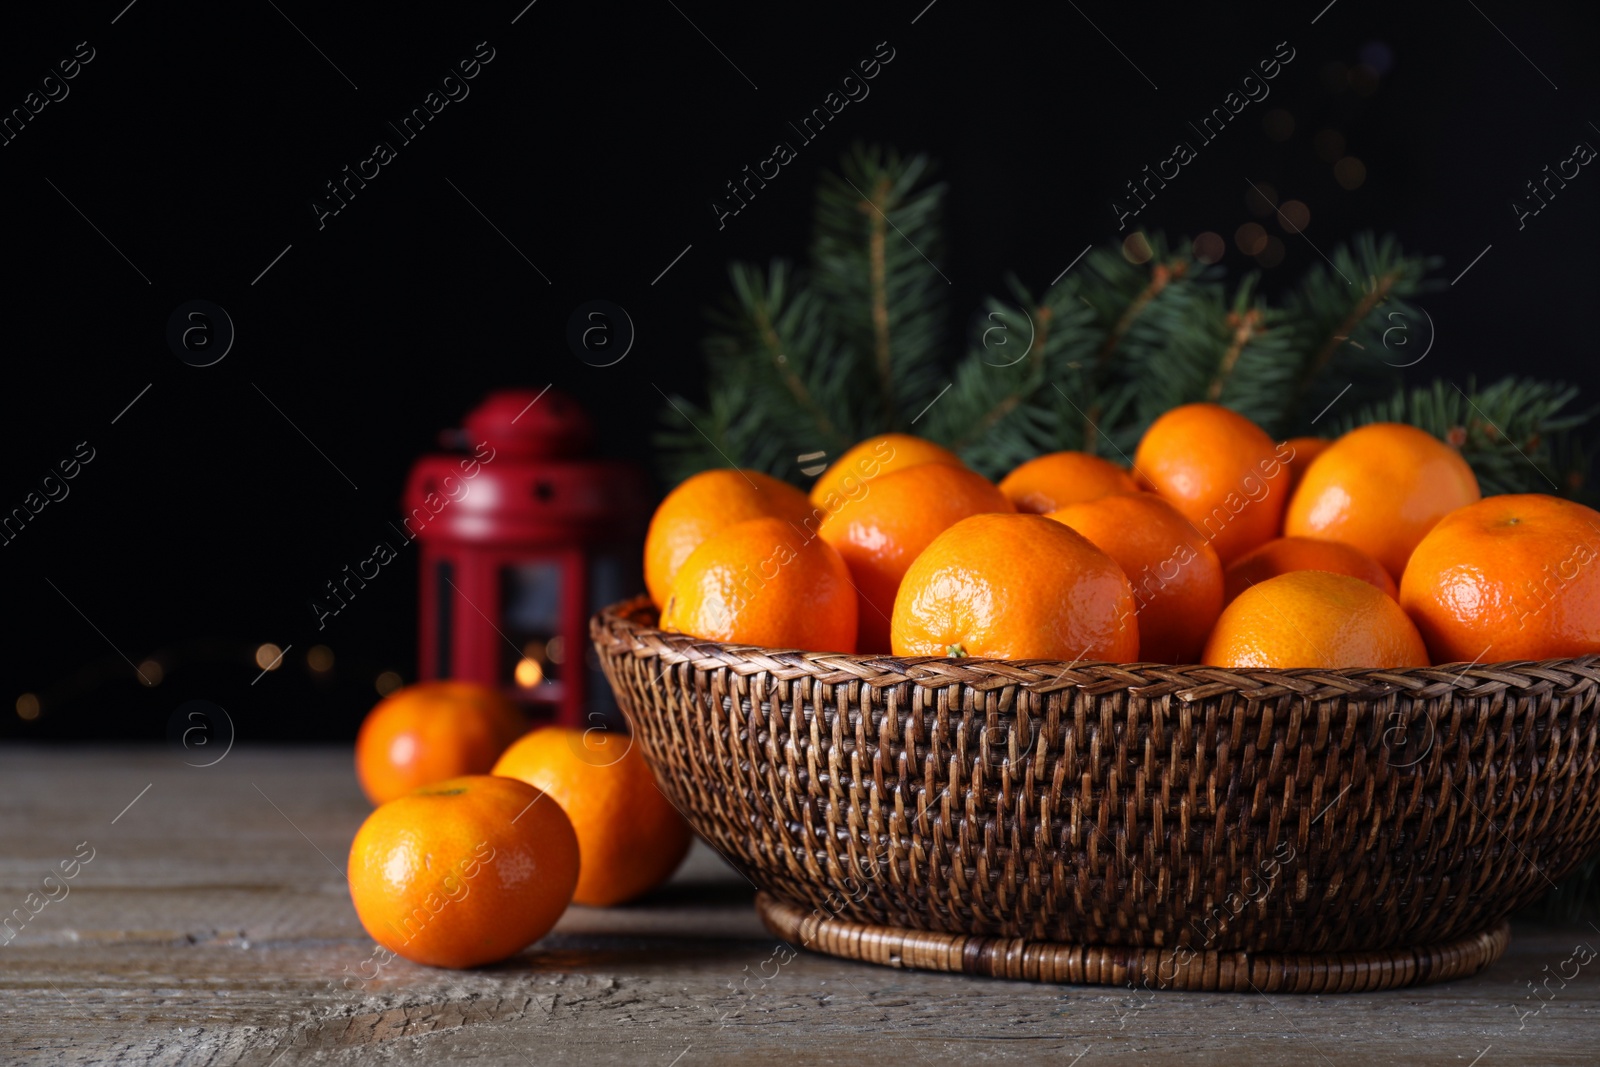 Photo of Ripe tangerines on wooden table against dark background. Christmas celebration